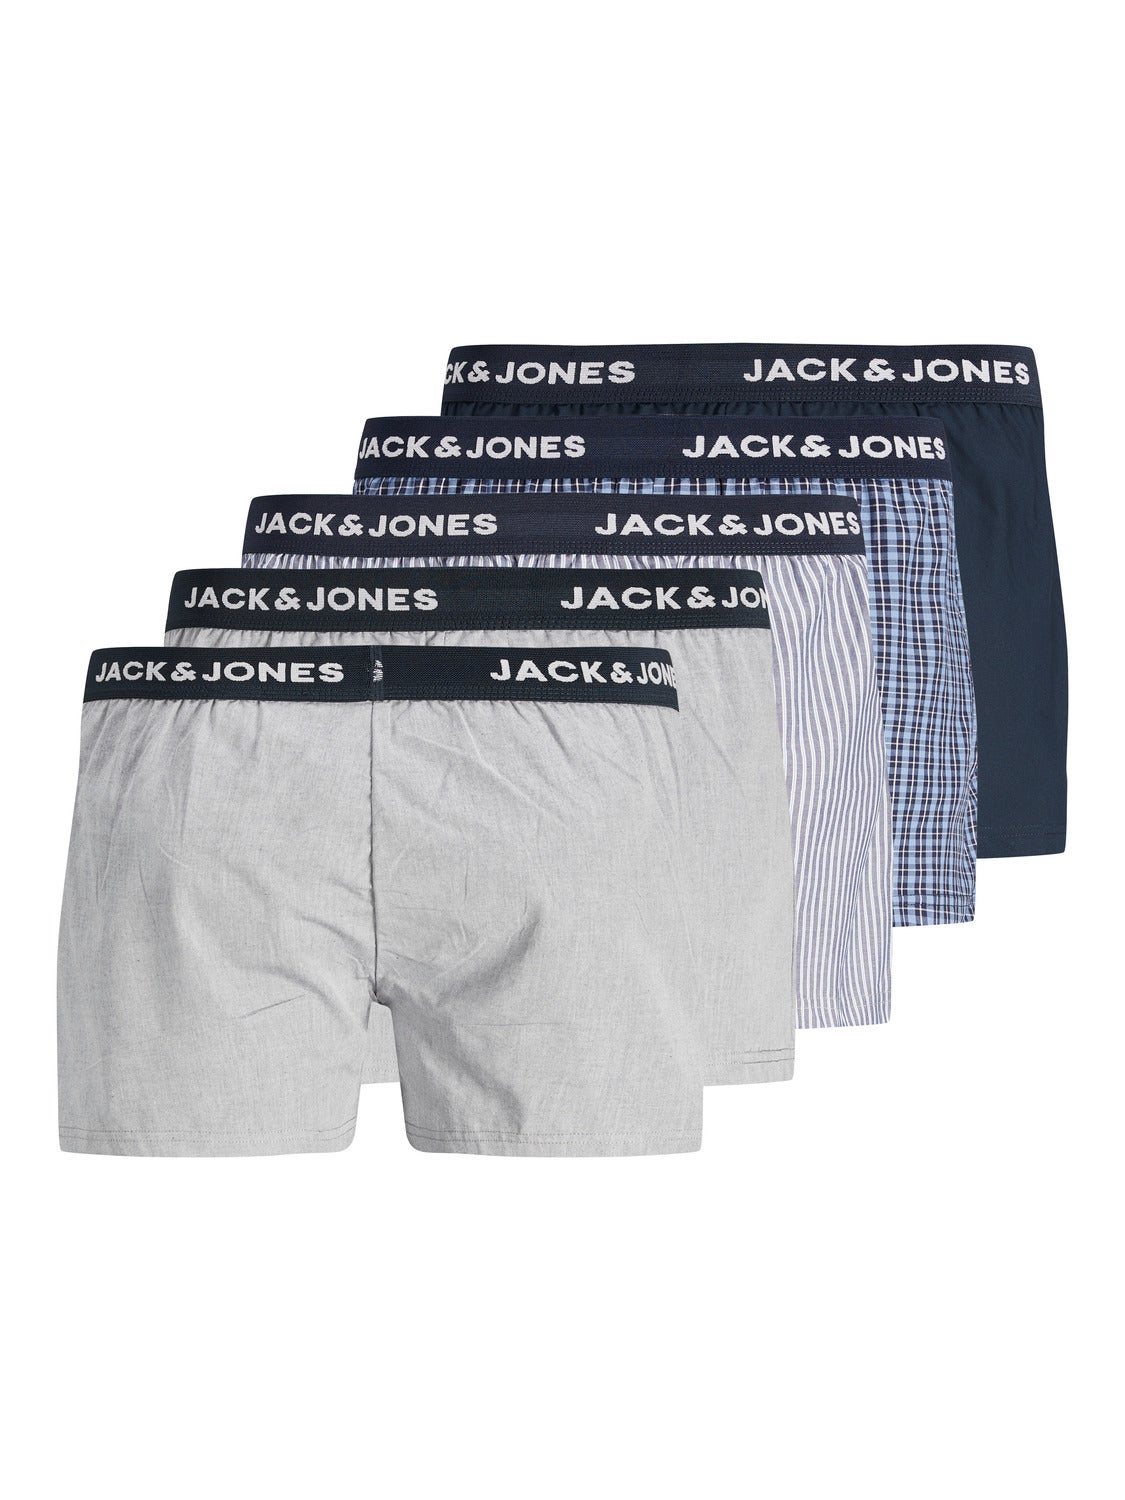 MEN FASHION Underwear & Nightwear Blue/Orange L Jack & Jones Underpant discount 75% 